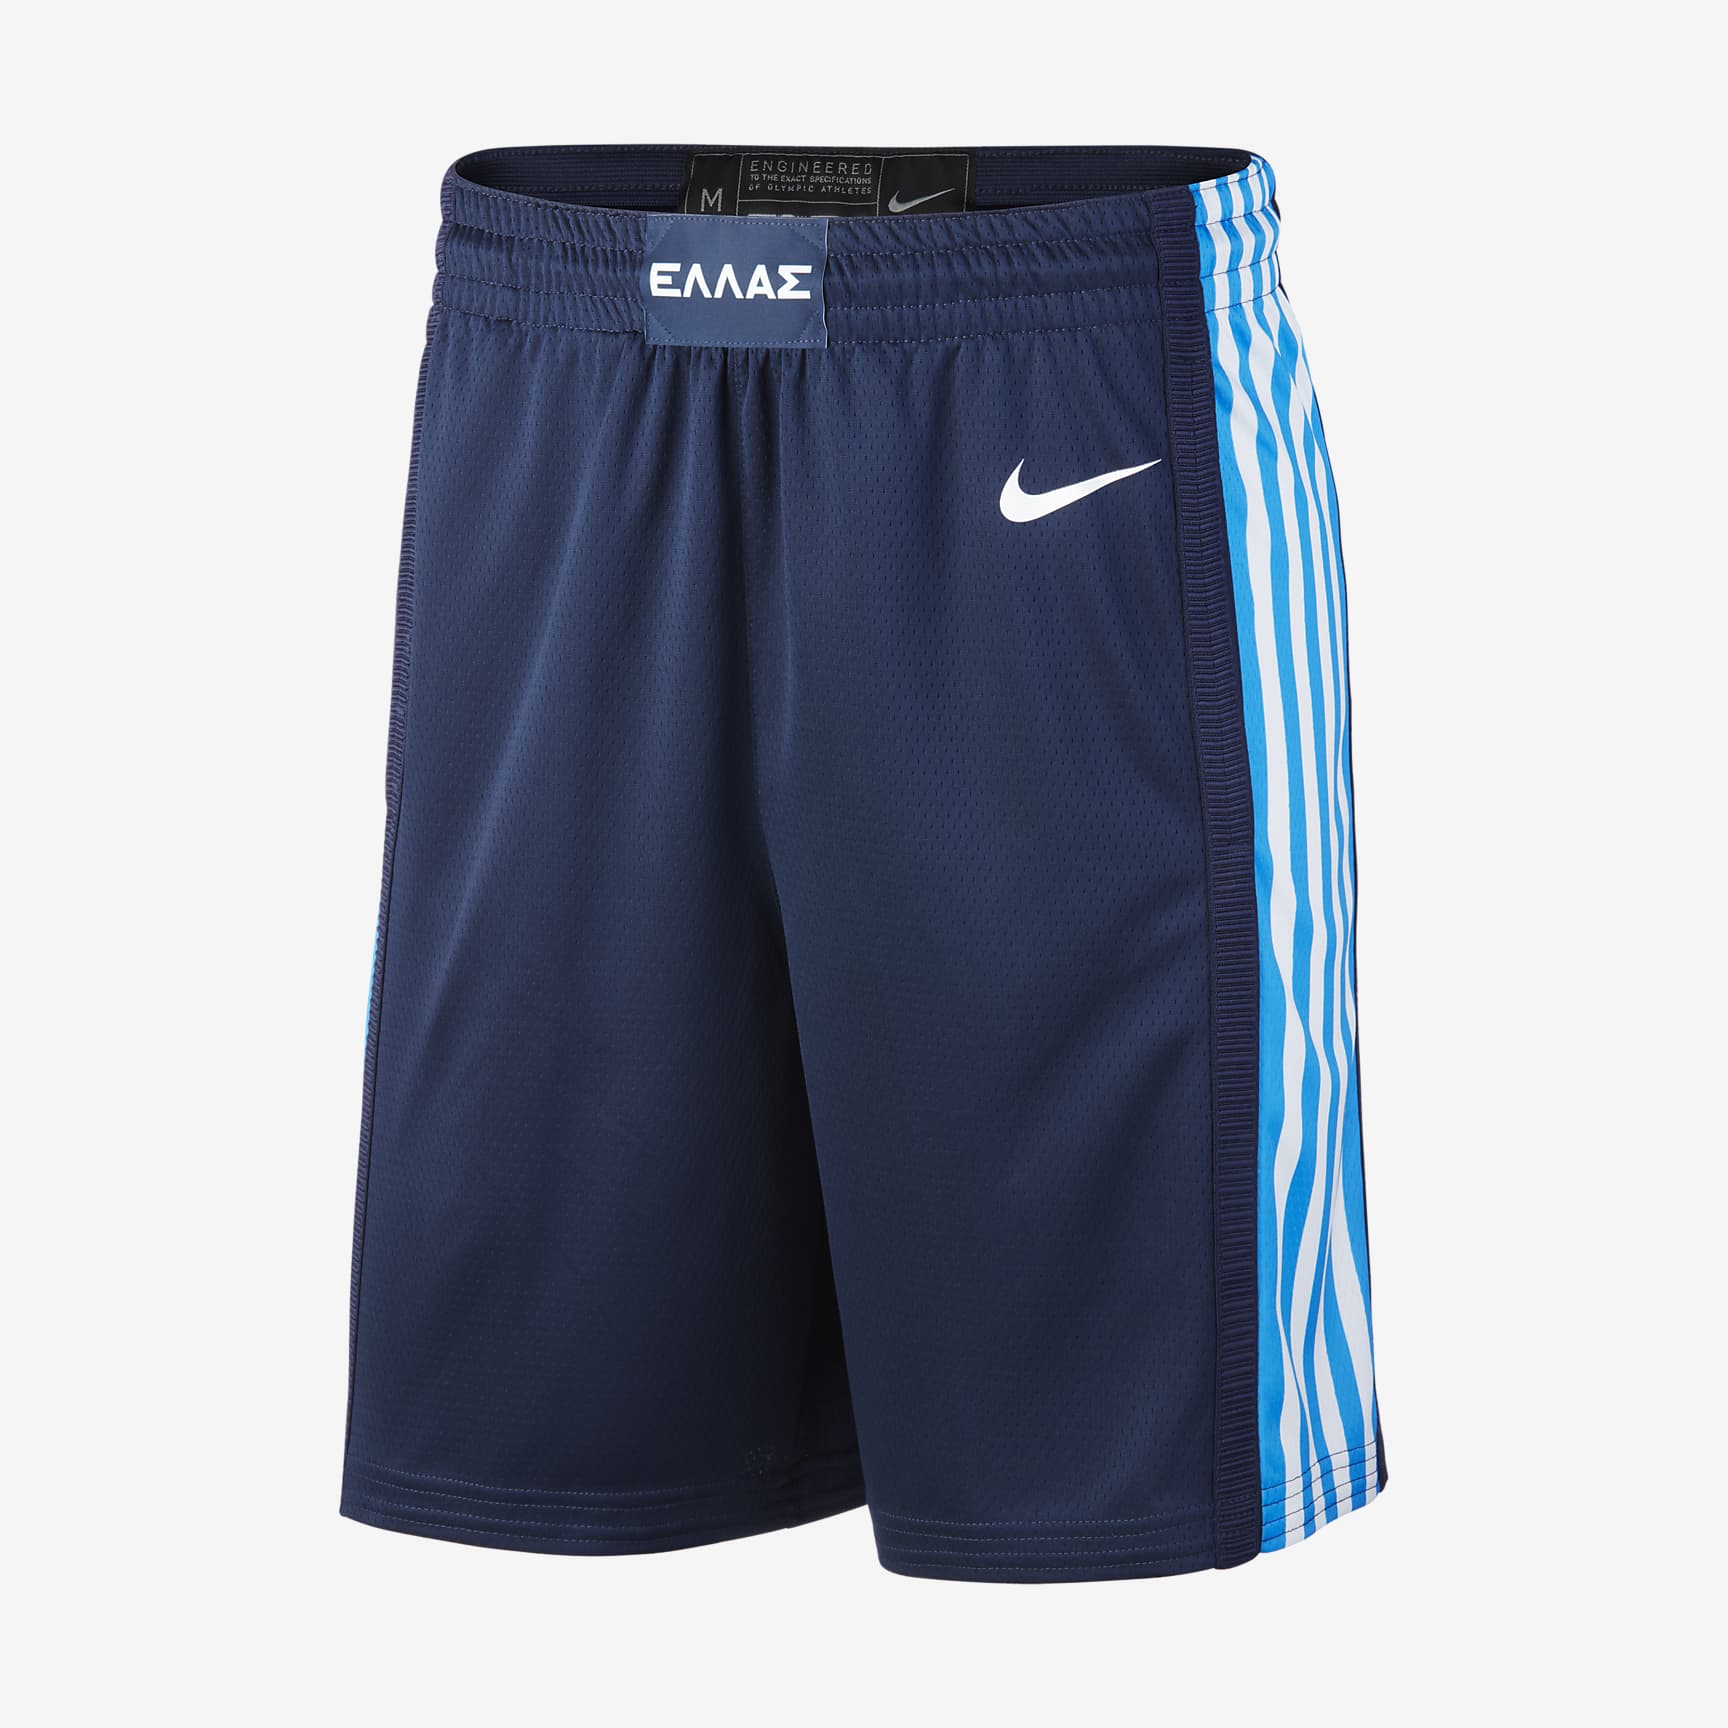 Greece Nike (Road) Limited Men's Basketball Shorts. Nike SK